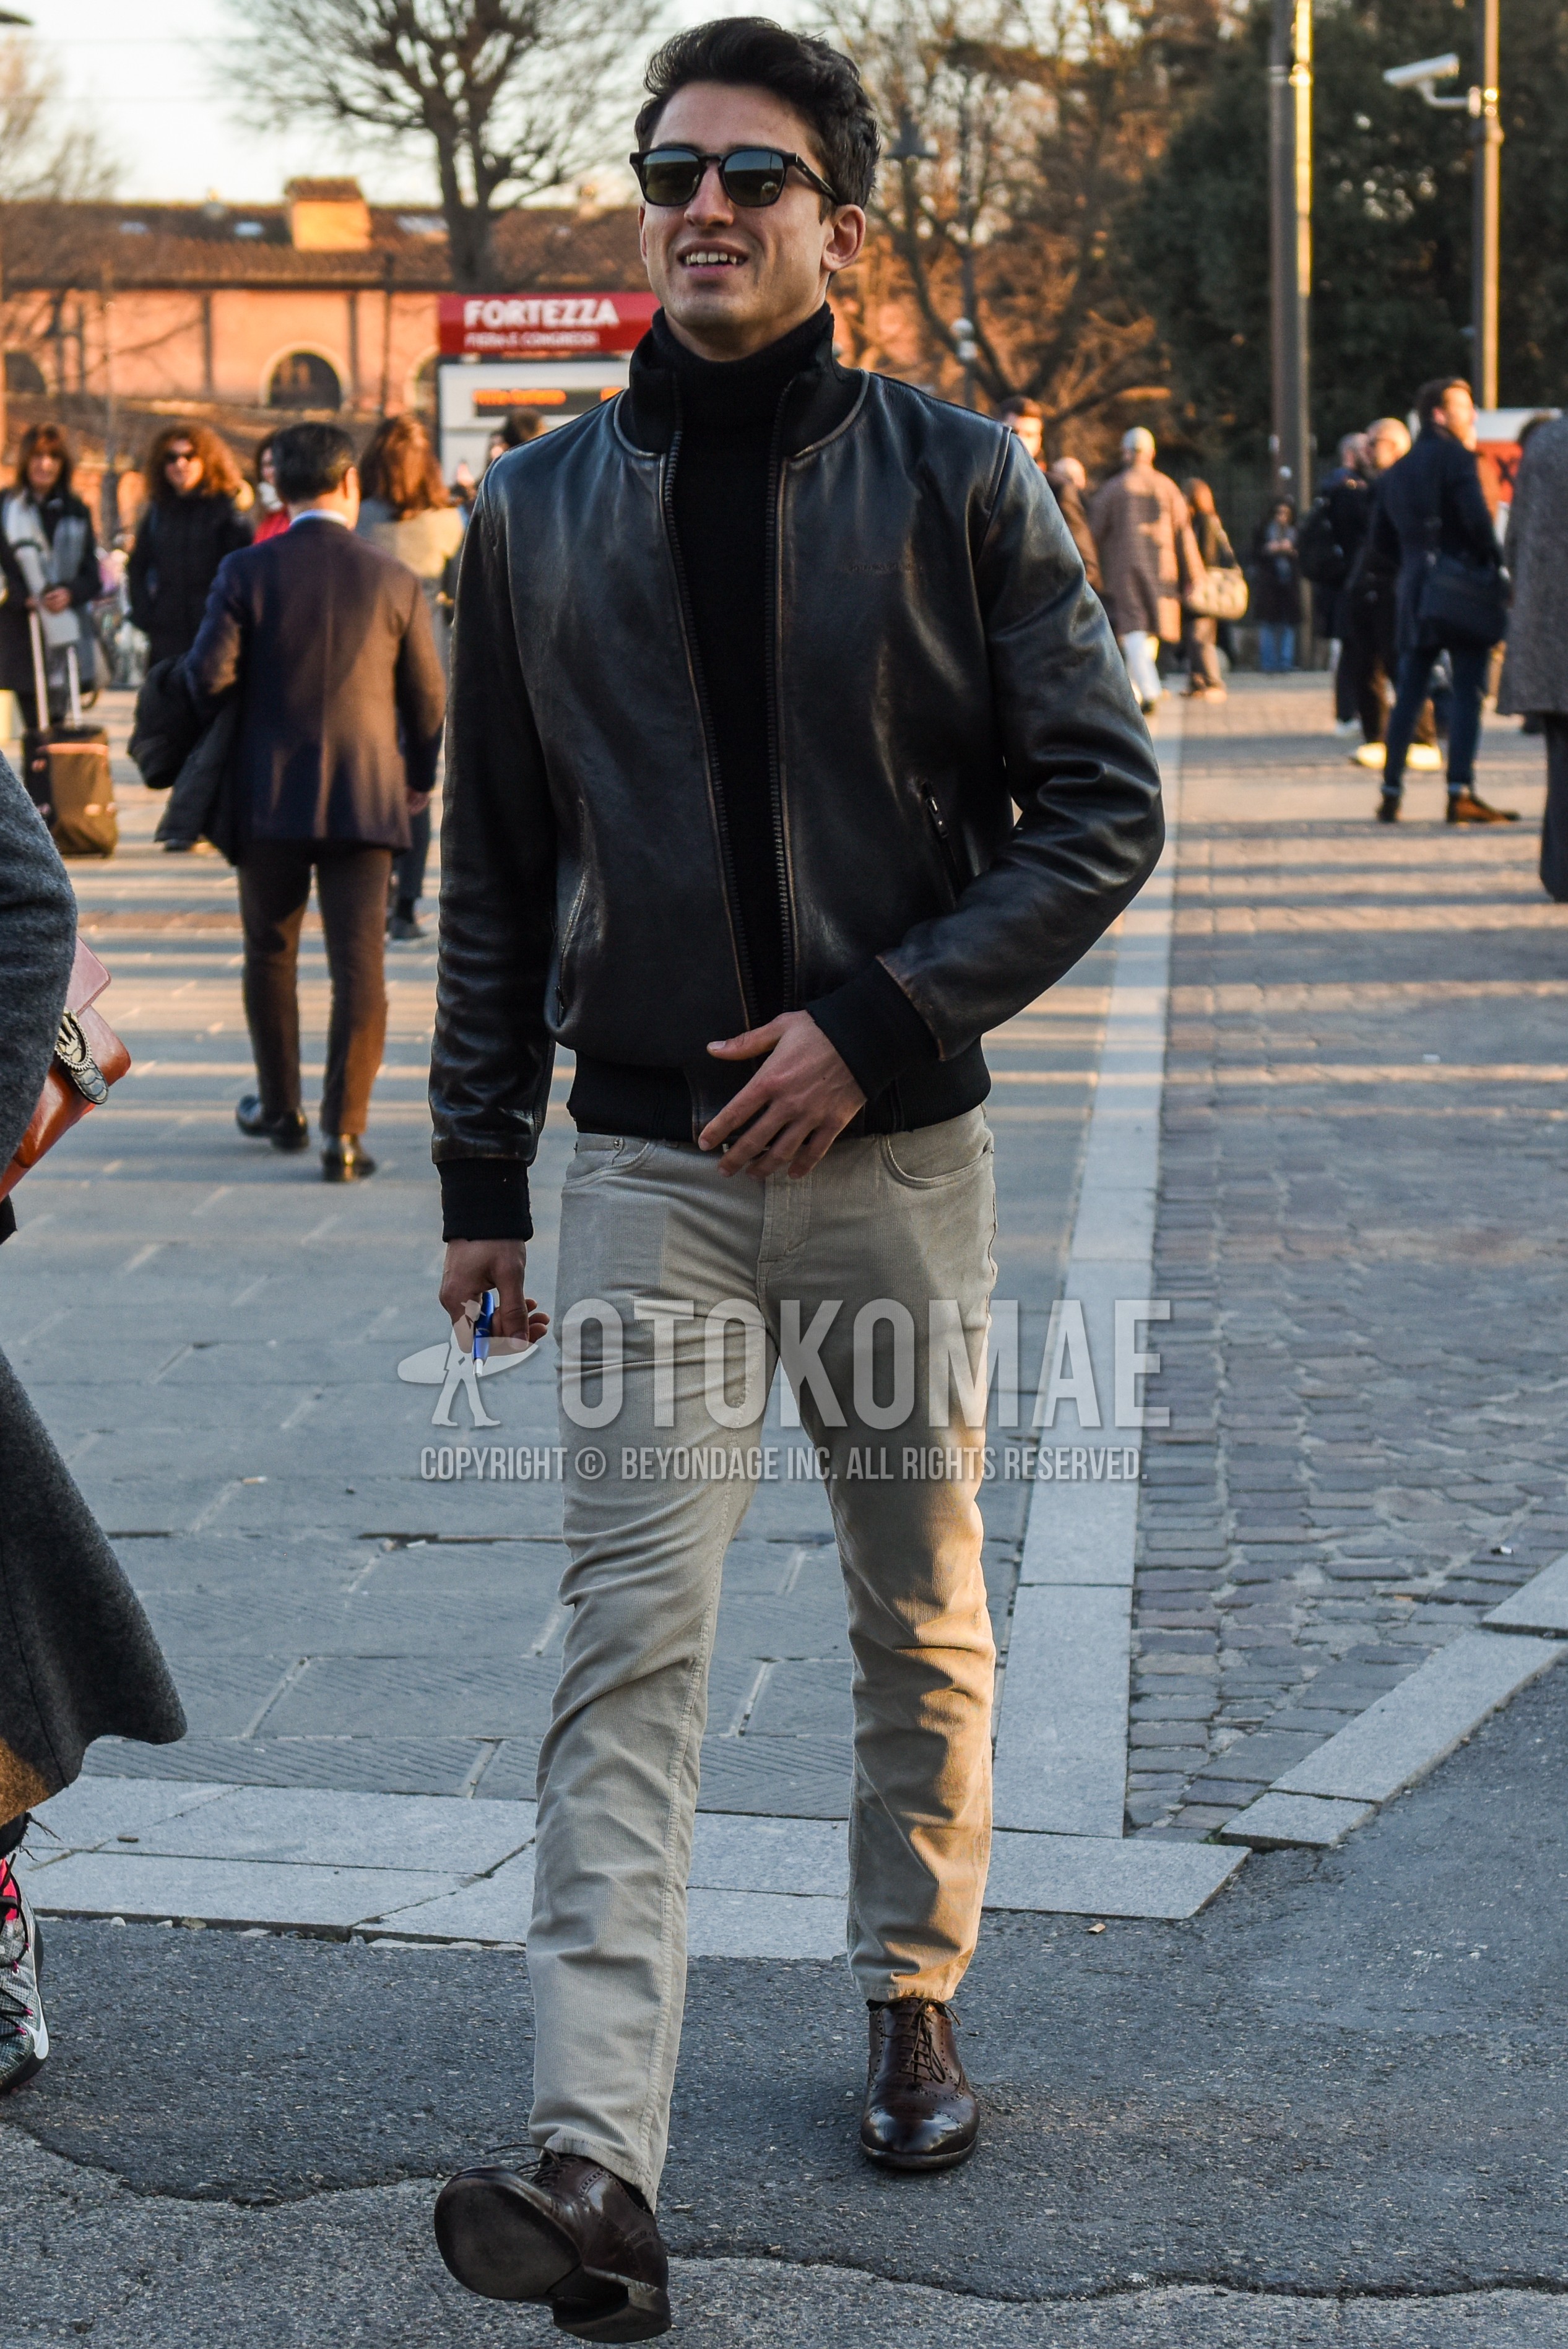 Men's autumn winter outfit with black plain sunglasses, black plain leather jacket, black plain turtleneck knit, beige plain chinos, brown brogue shoes leather shoes.